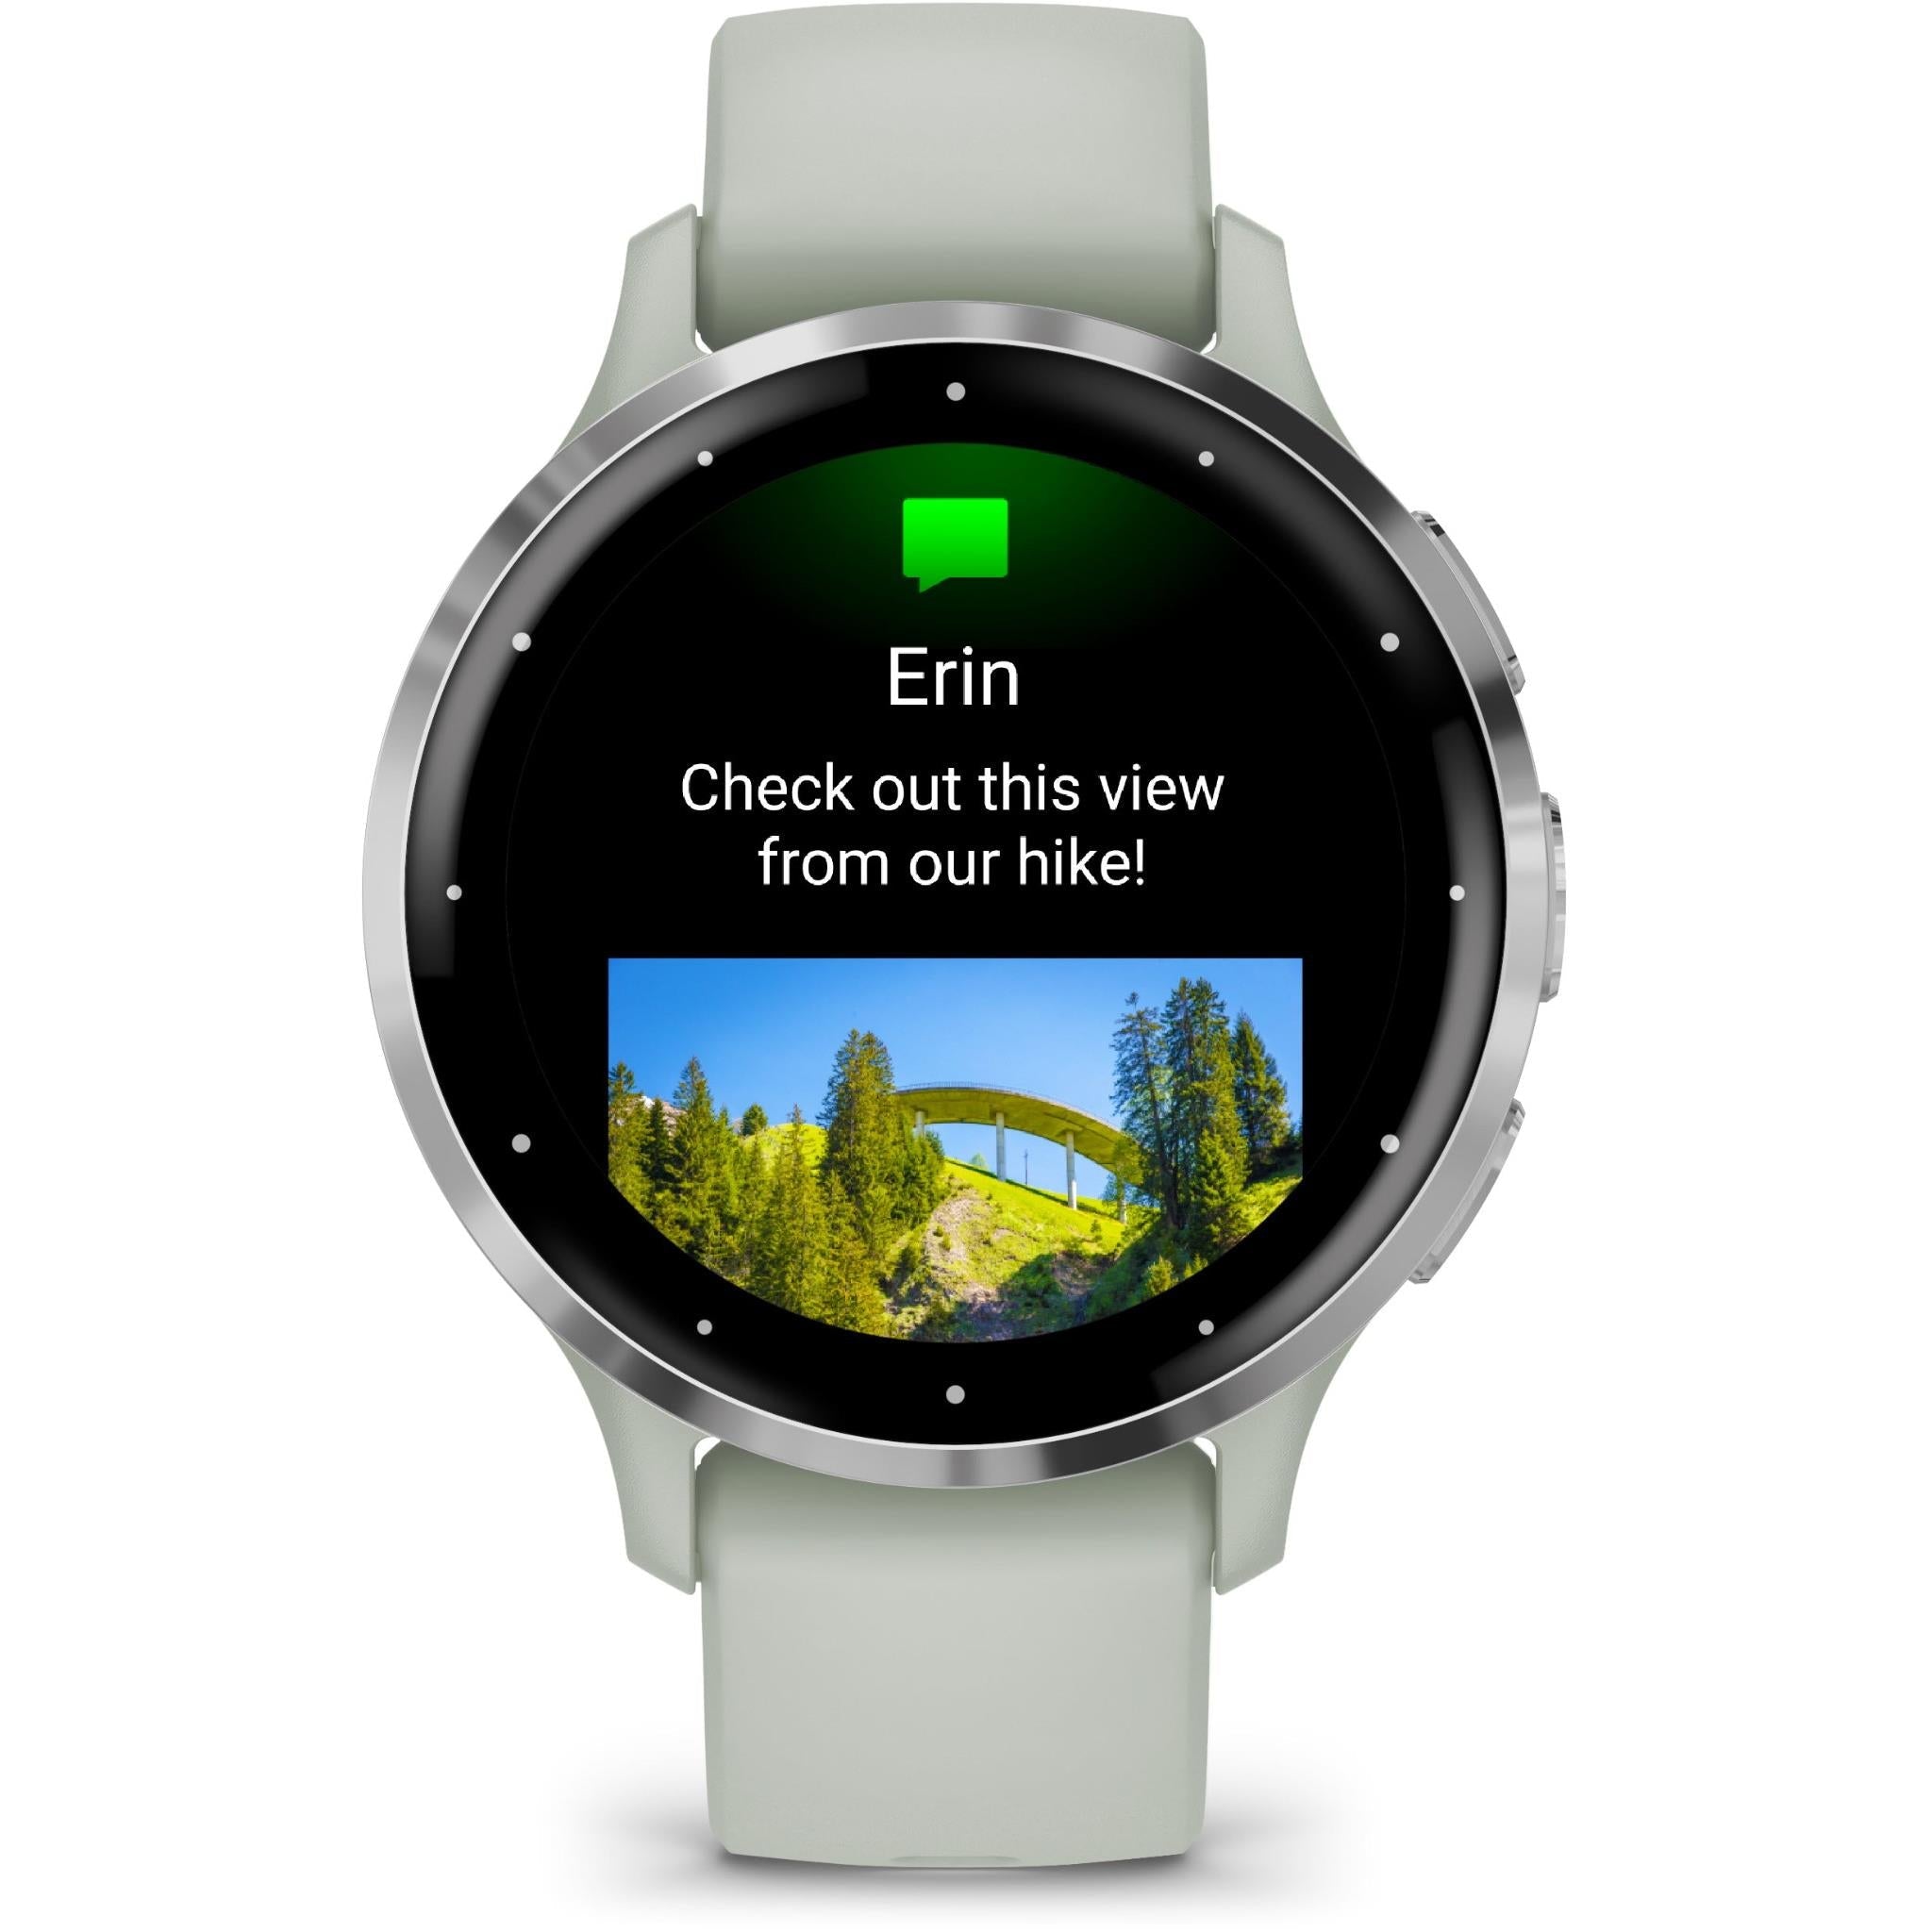 Garmin Venu 3S GPS Smartwatch AMOLED Display Sports Watch -Sage Gray Garmin